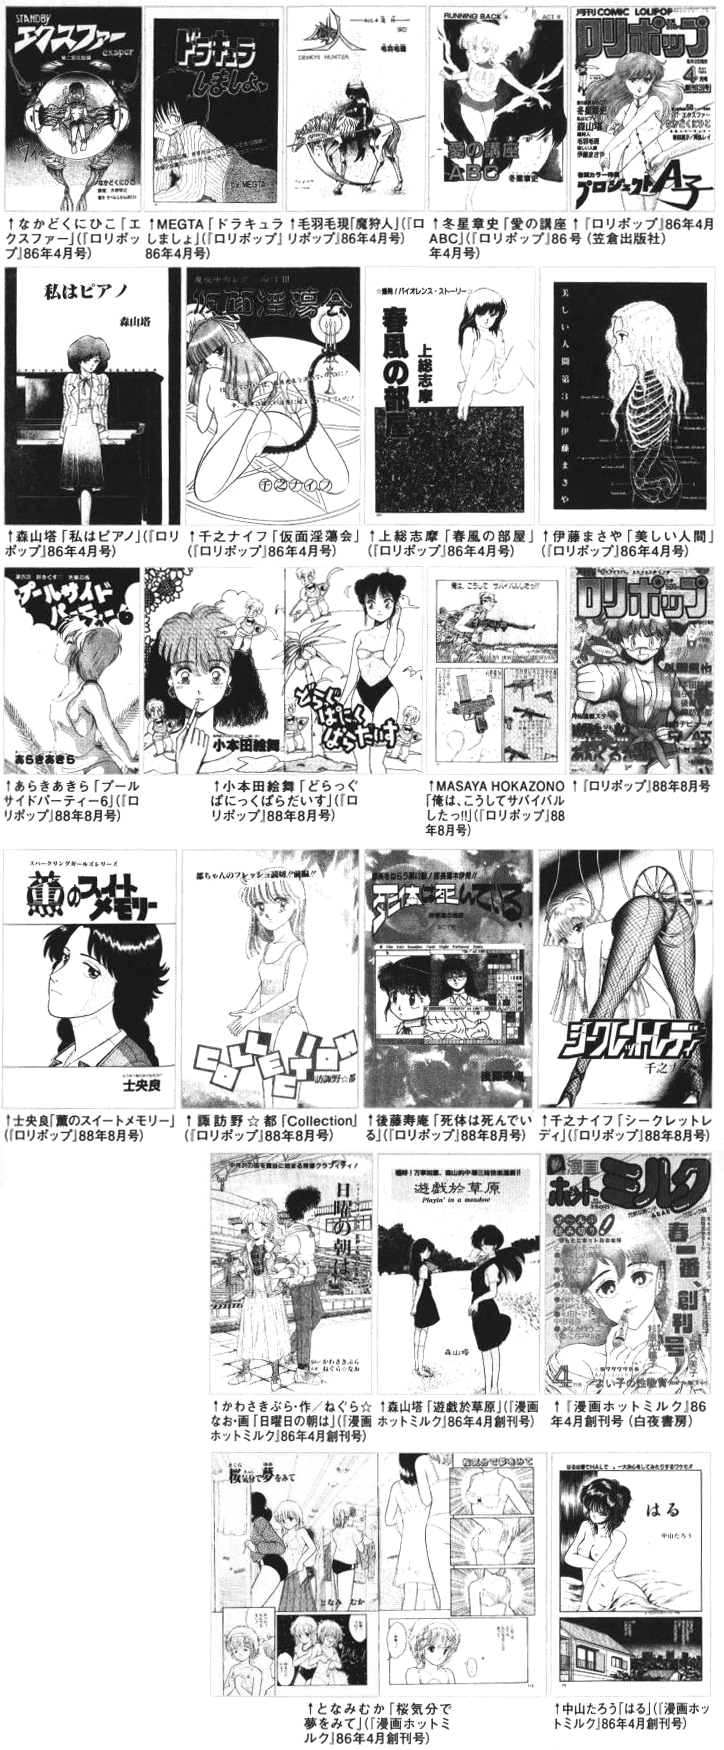 Postwar_36_04_Lolipop_1986_Apr_and_1988_Aug_and_Manga_Hot_Milk_1986_Apr_Issues.png